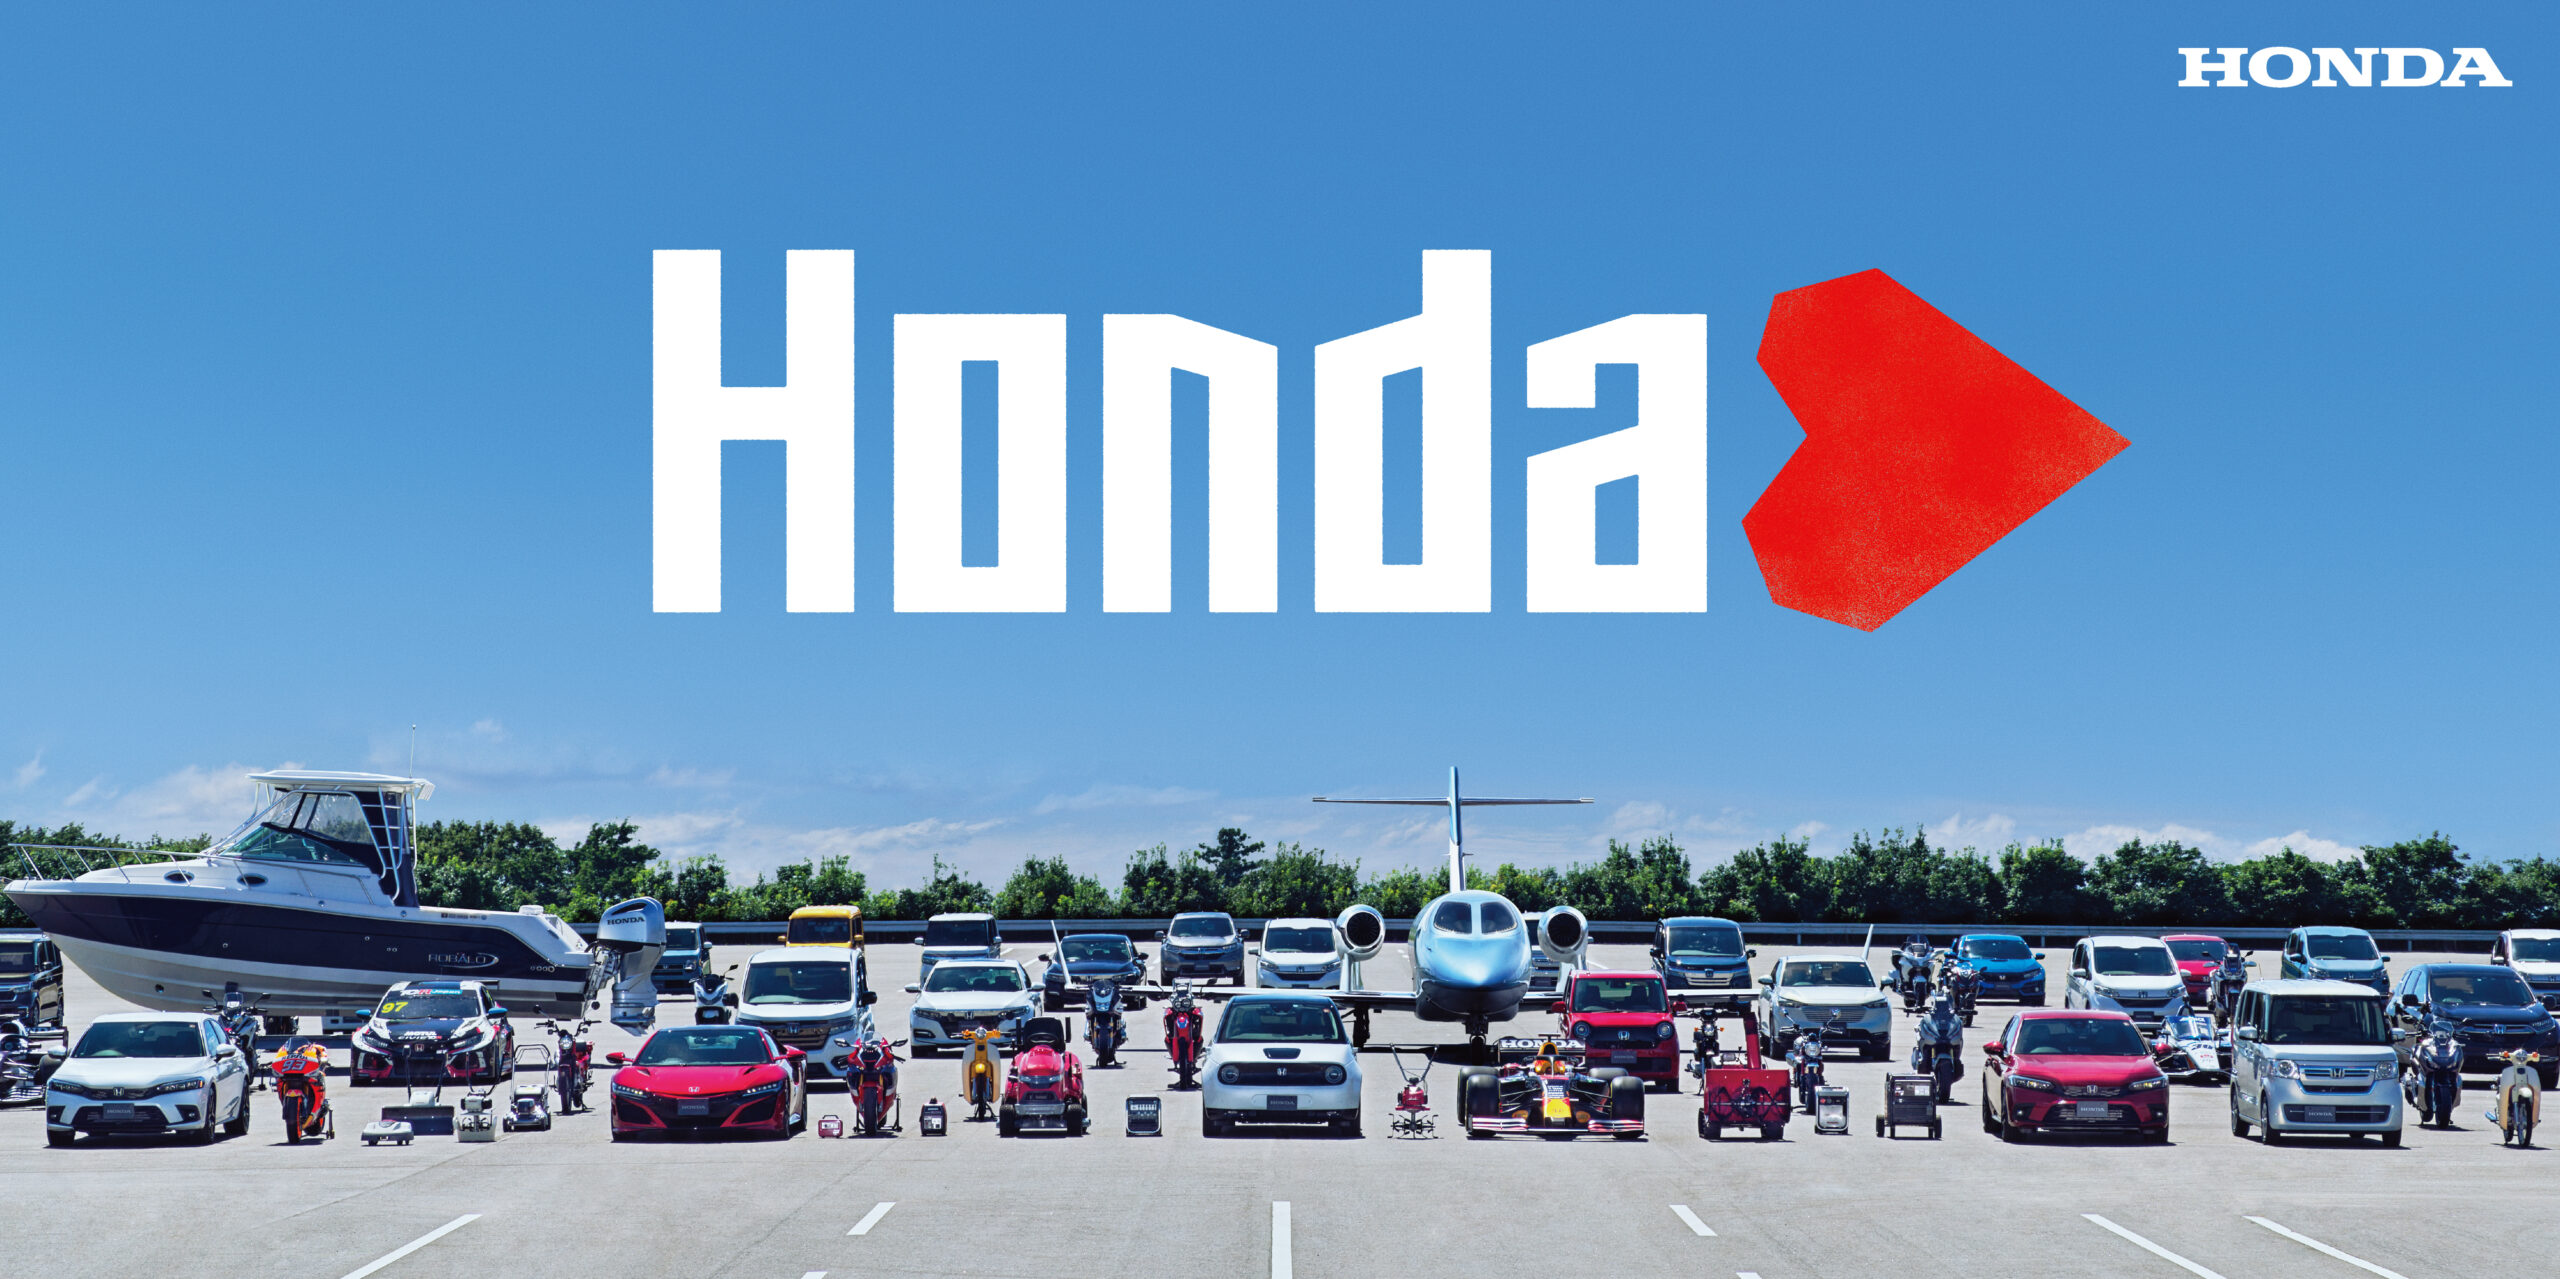 Honda「Hondaハート」プロジェクト